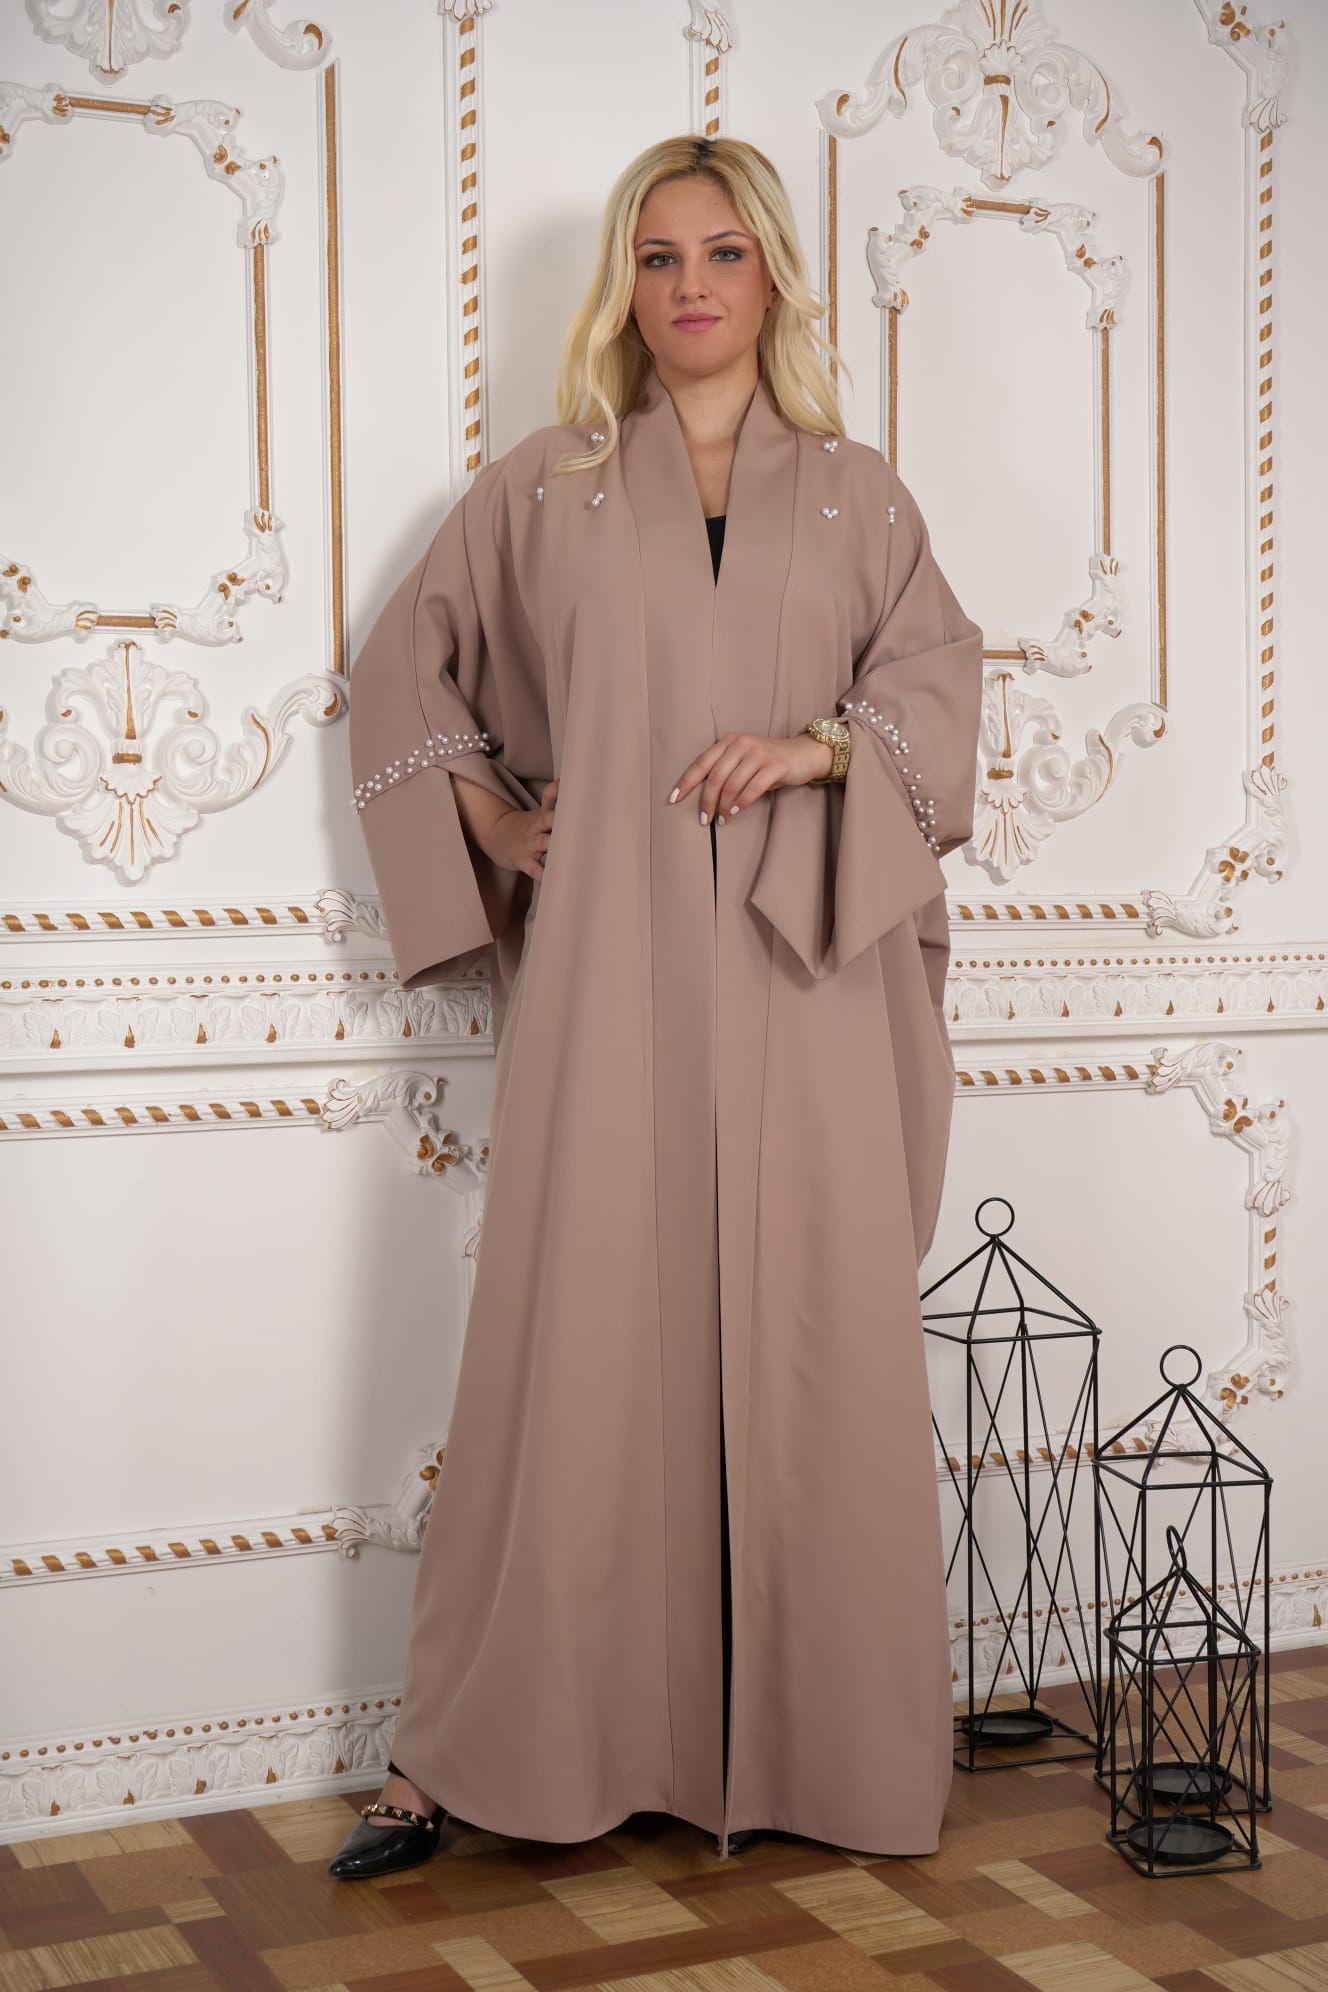 Kimono Sleeve abaya and pearl embellishment